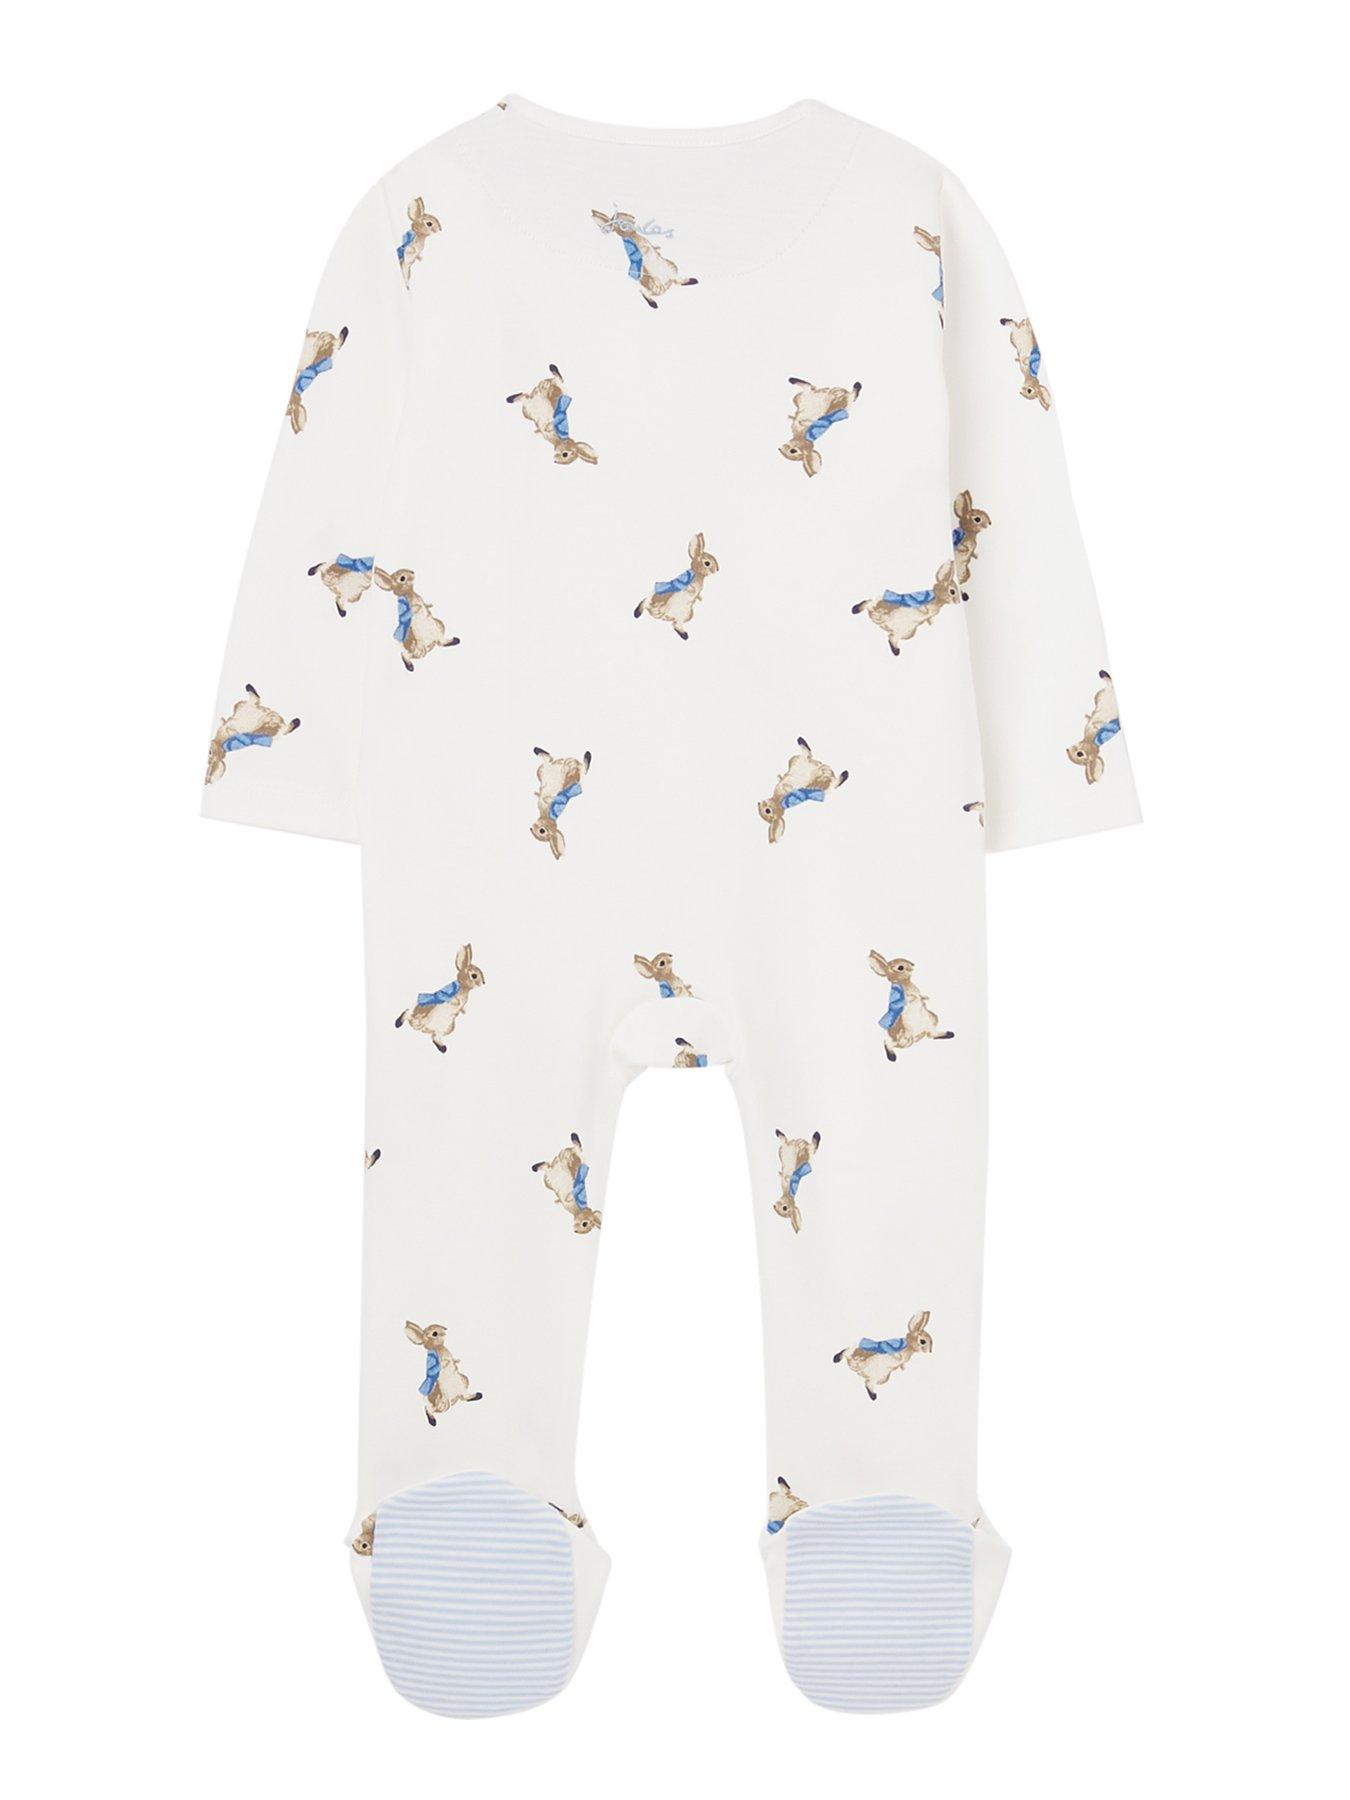  Unisex Baby Peter Rabbit Zippy Sleepsuit - White